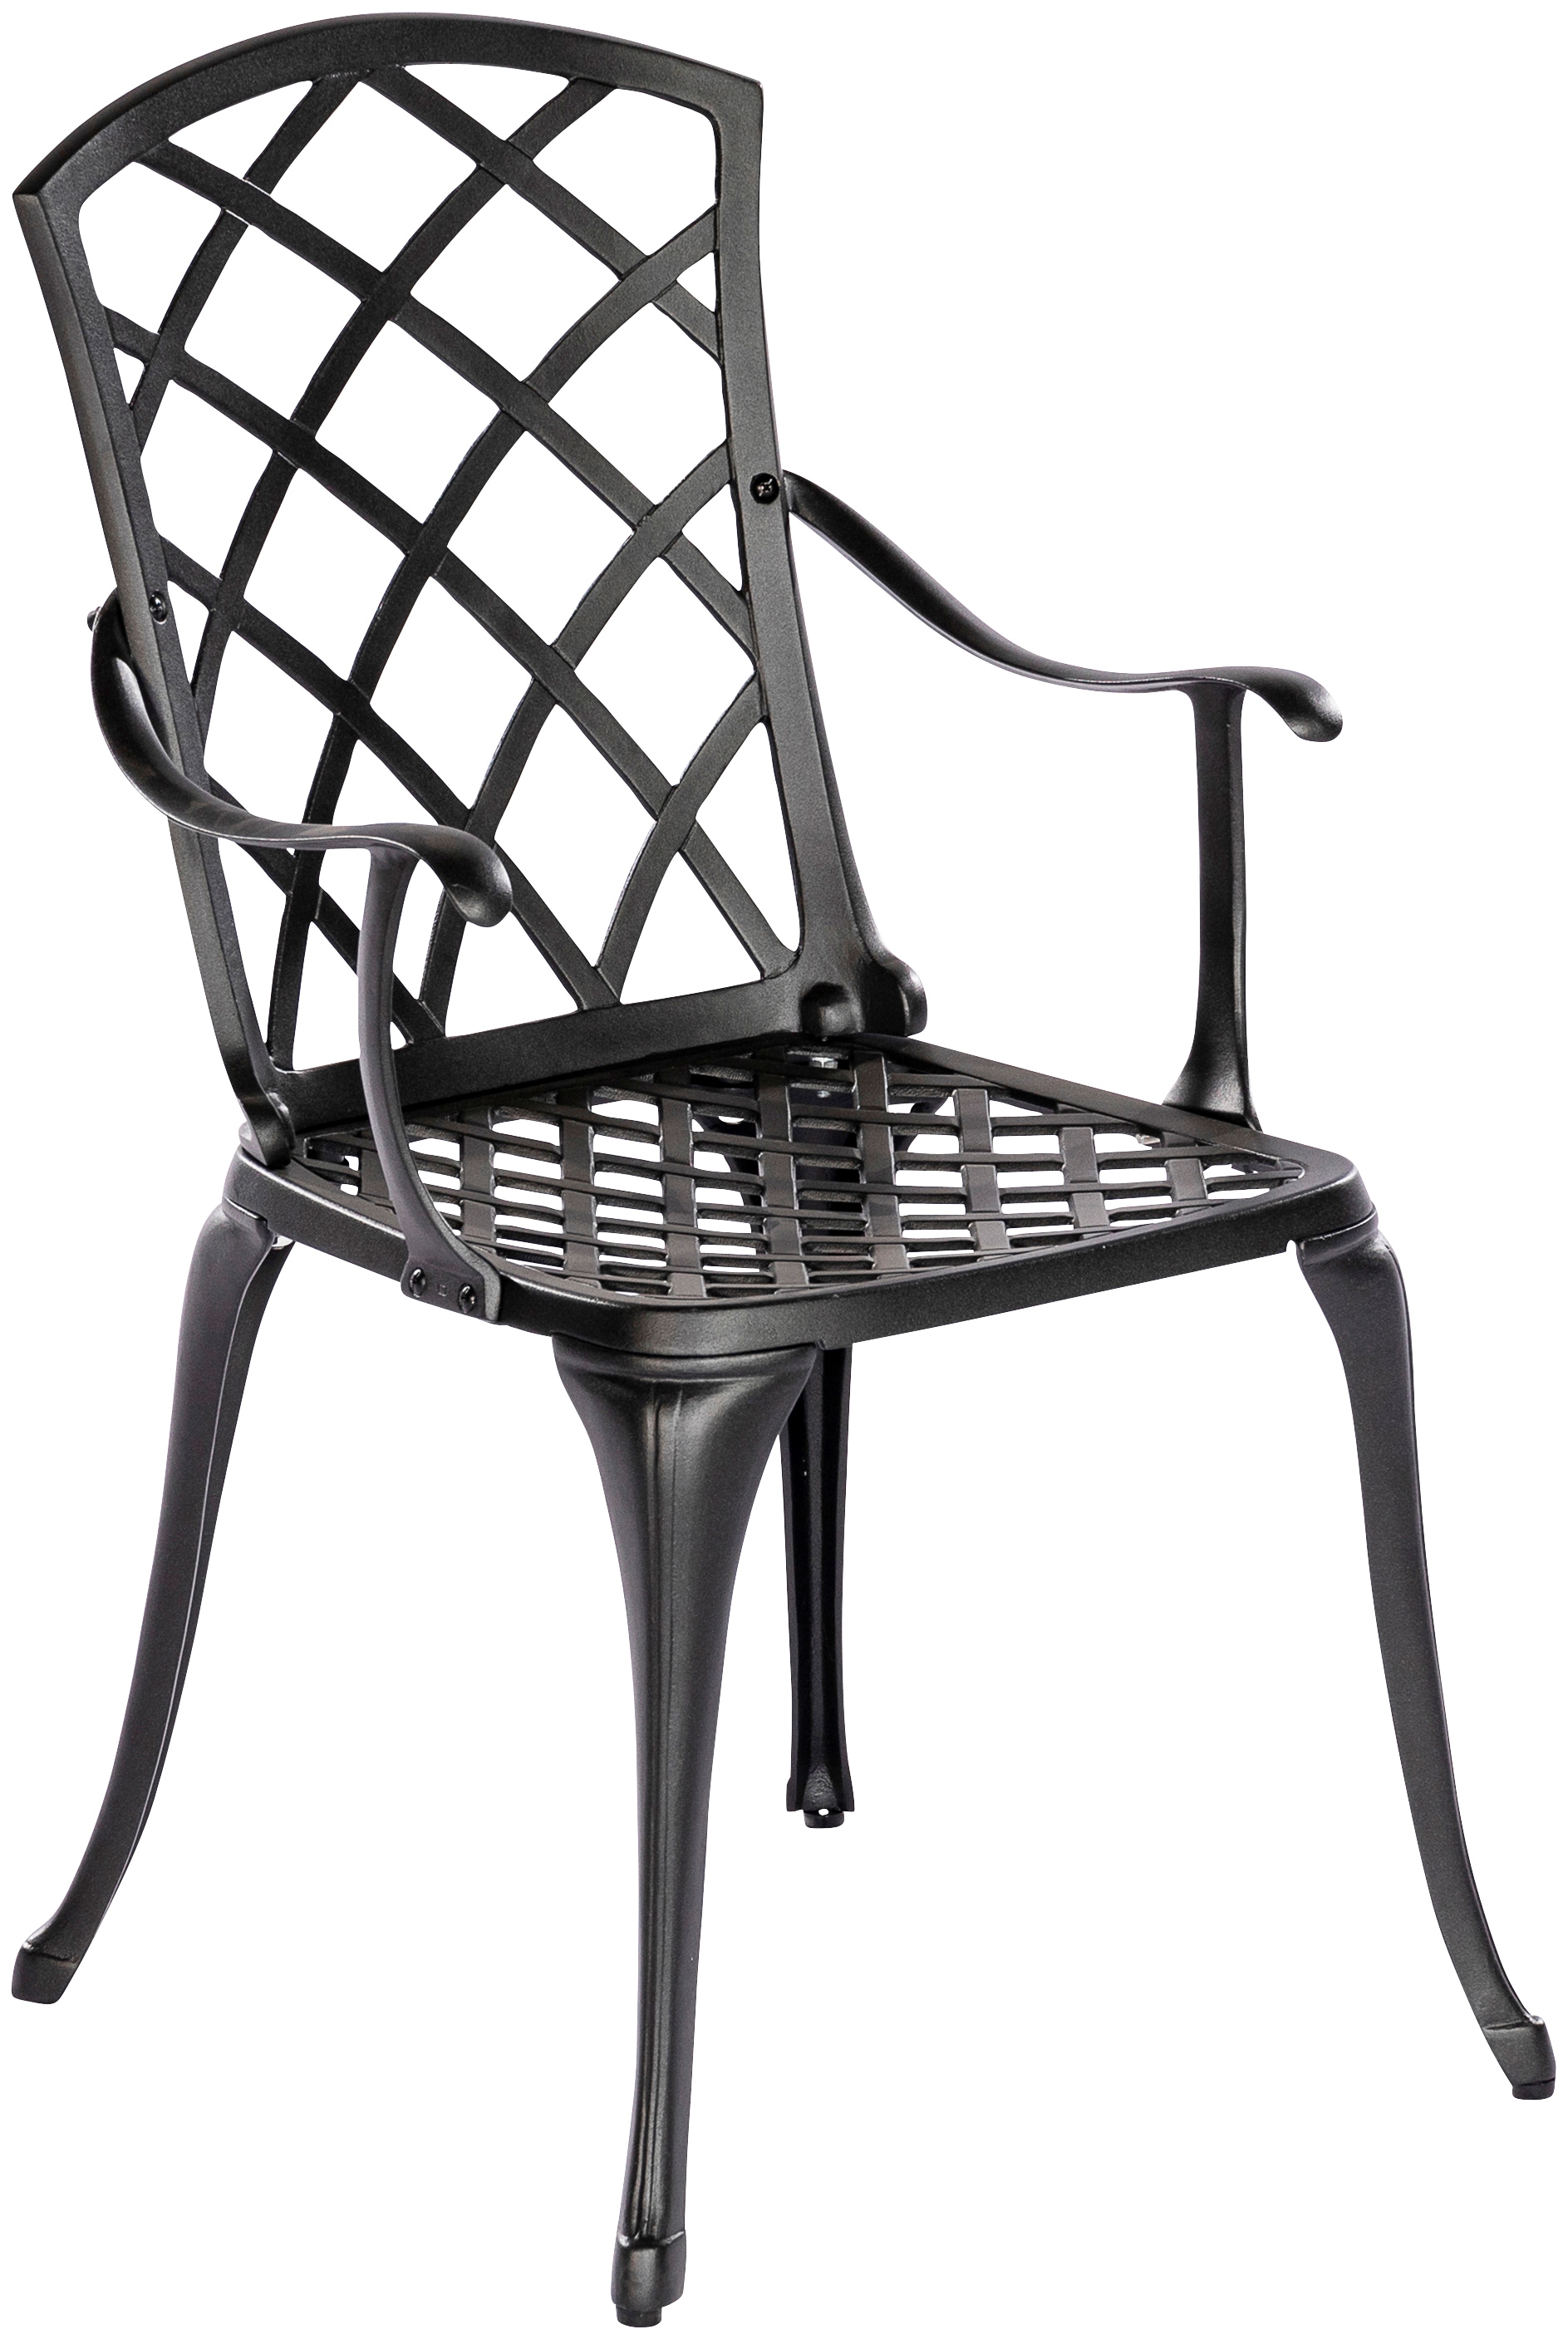 MERXX Poilsio kėdė »Rhodos« 1 St. Aluminiumg...